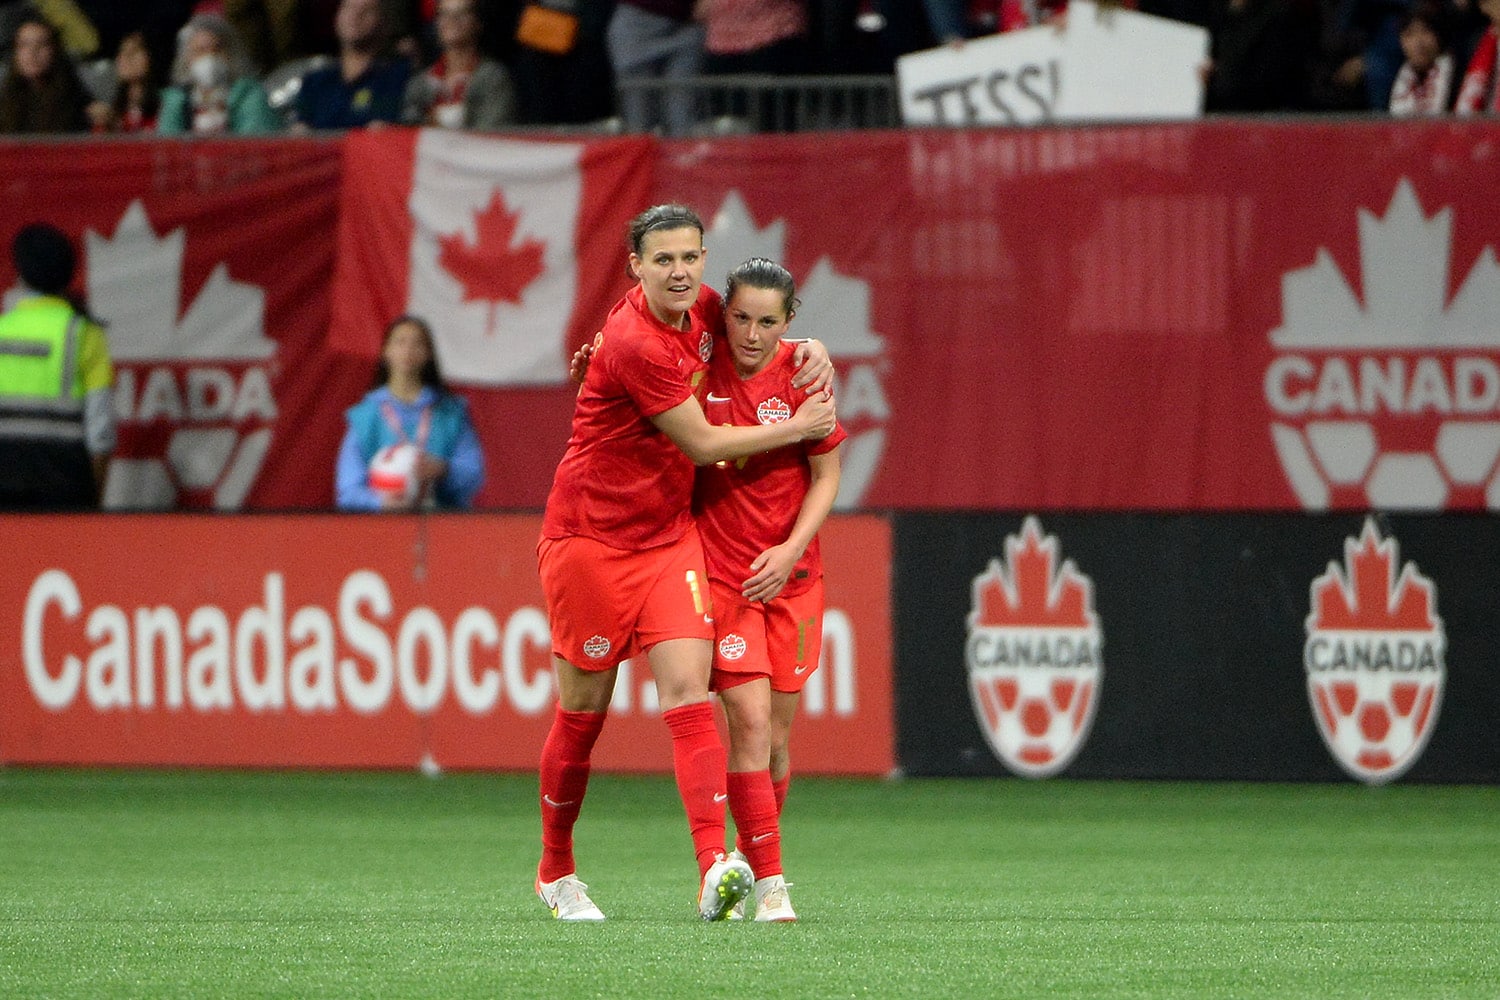 Canadian National midfielder Jessie Fleming celebrates her goal with forward Christine Sinclair.